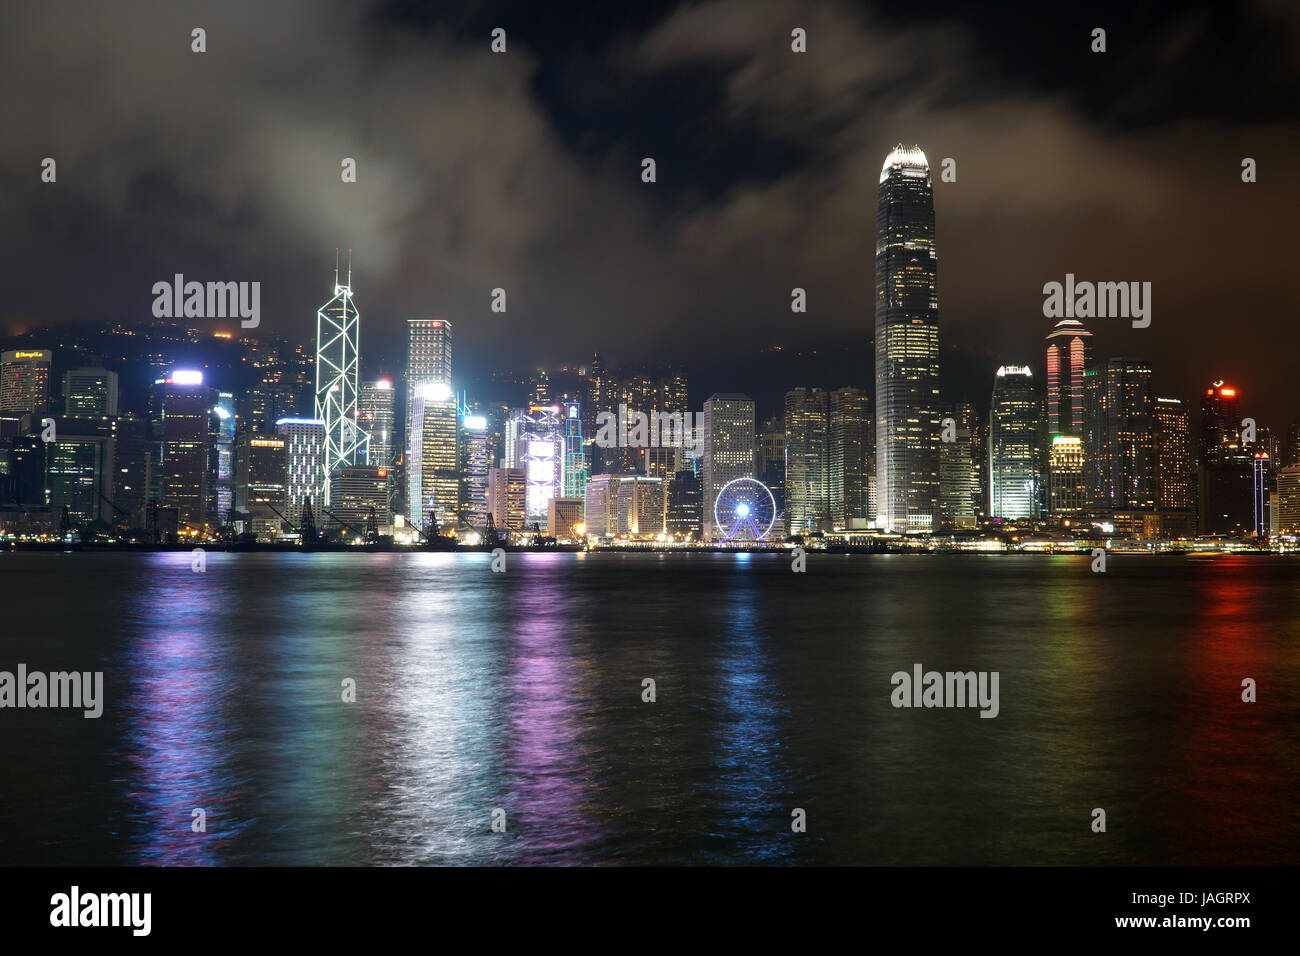 Hong Kong Island city skyline. The Hong Kong Opera House can be seen. Stock Photo